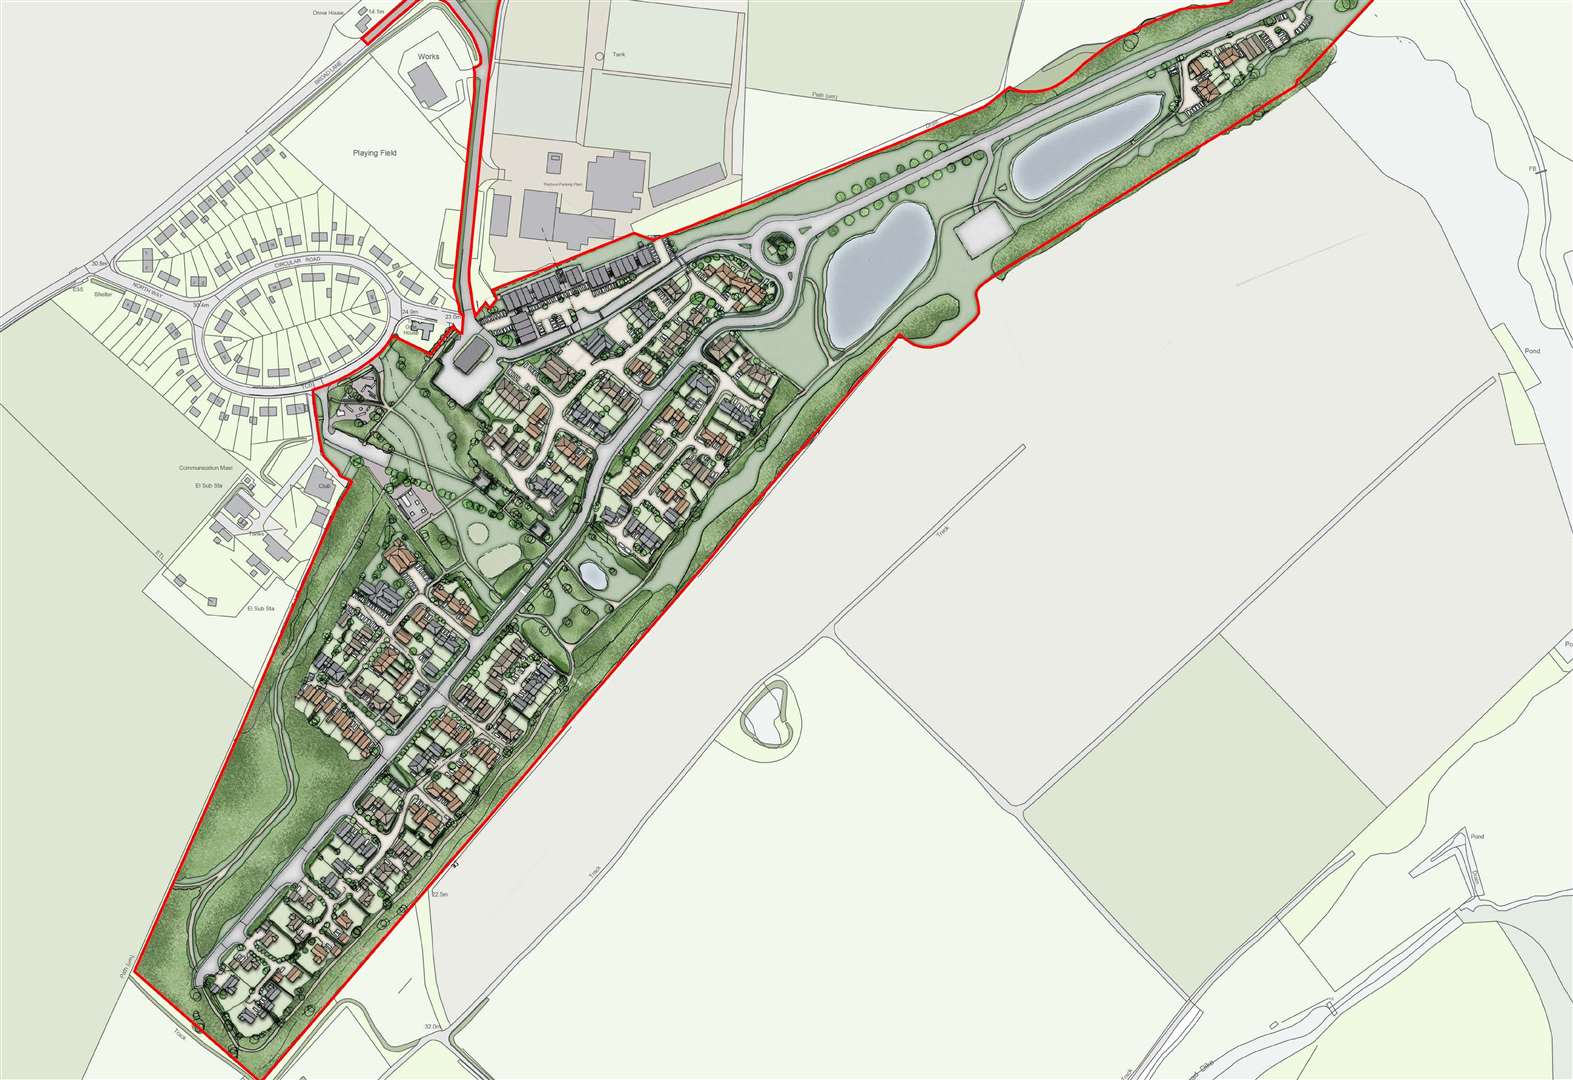 The proposed develpment site